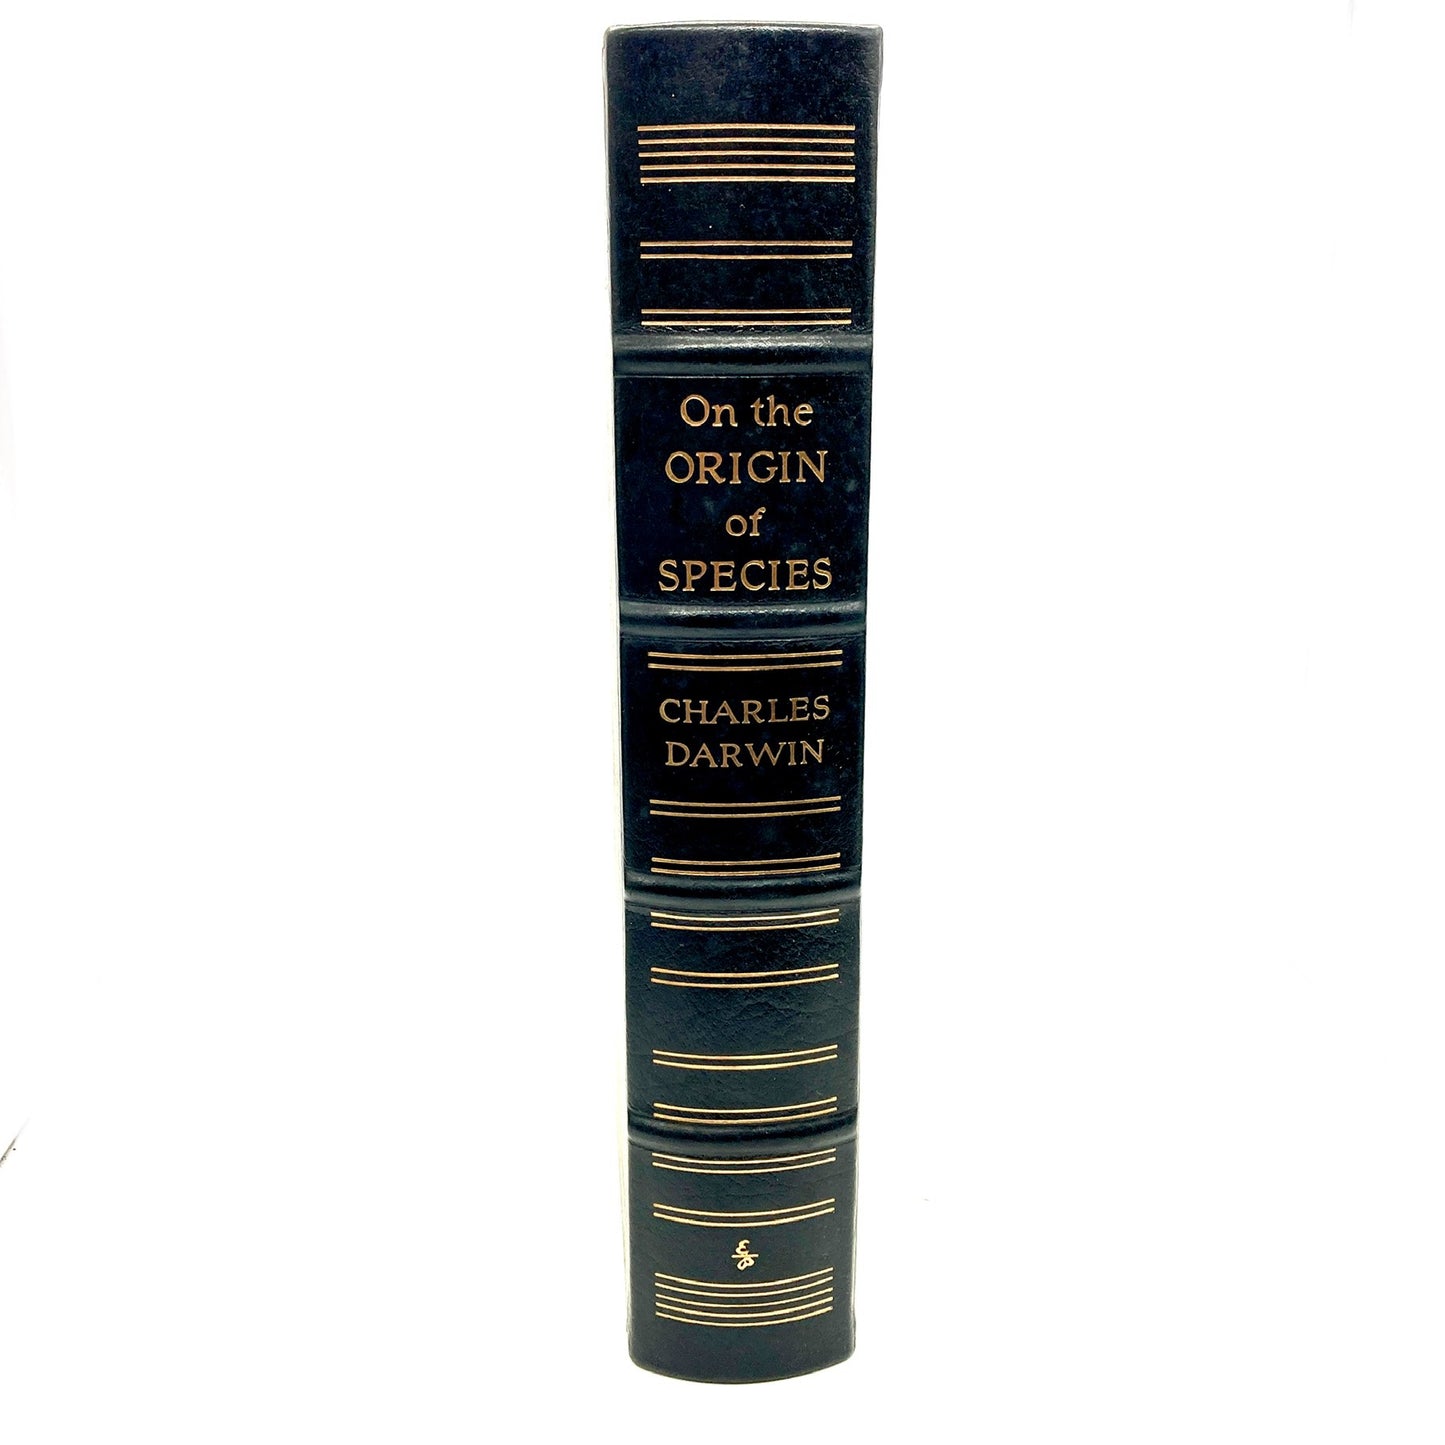 DARWIN, Charles "On the Origin of Species" [Easton Press, 1976]